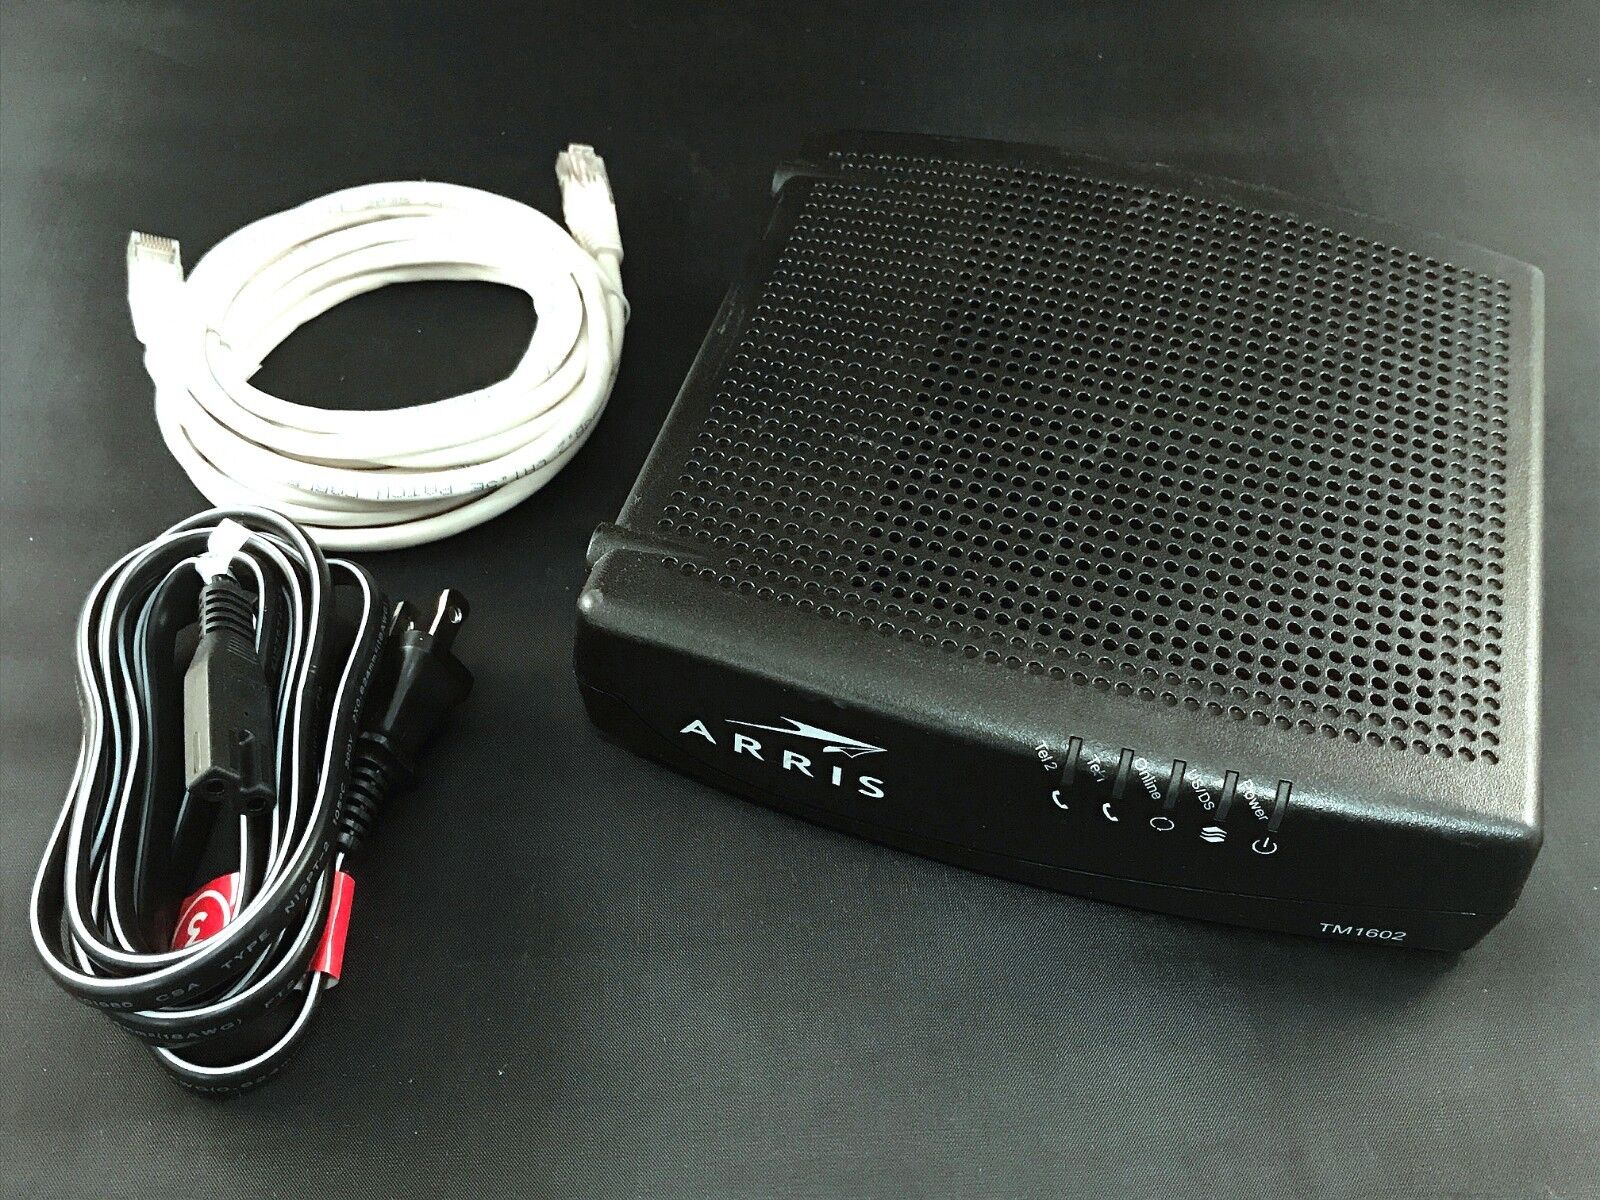 A lot of 20pcs Arris TM1602A Cable Modem Docsis 3.0 Telephony Modem